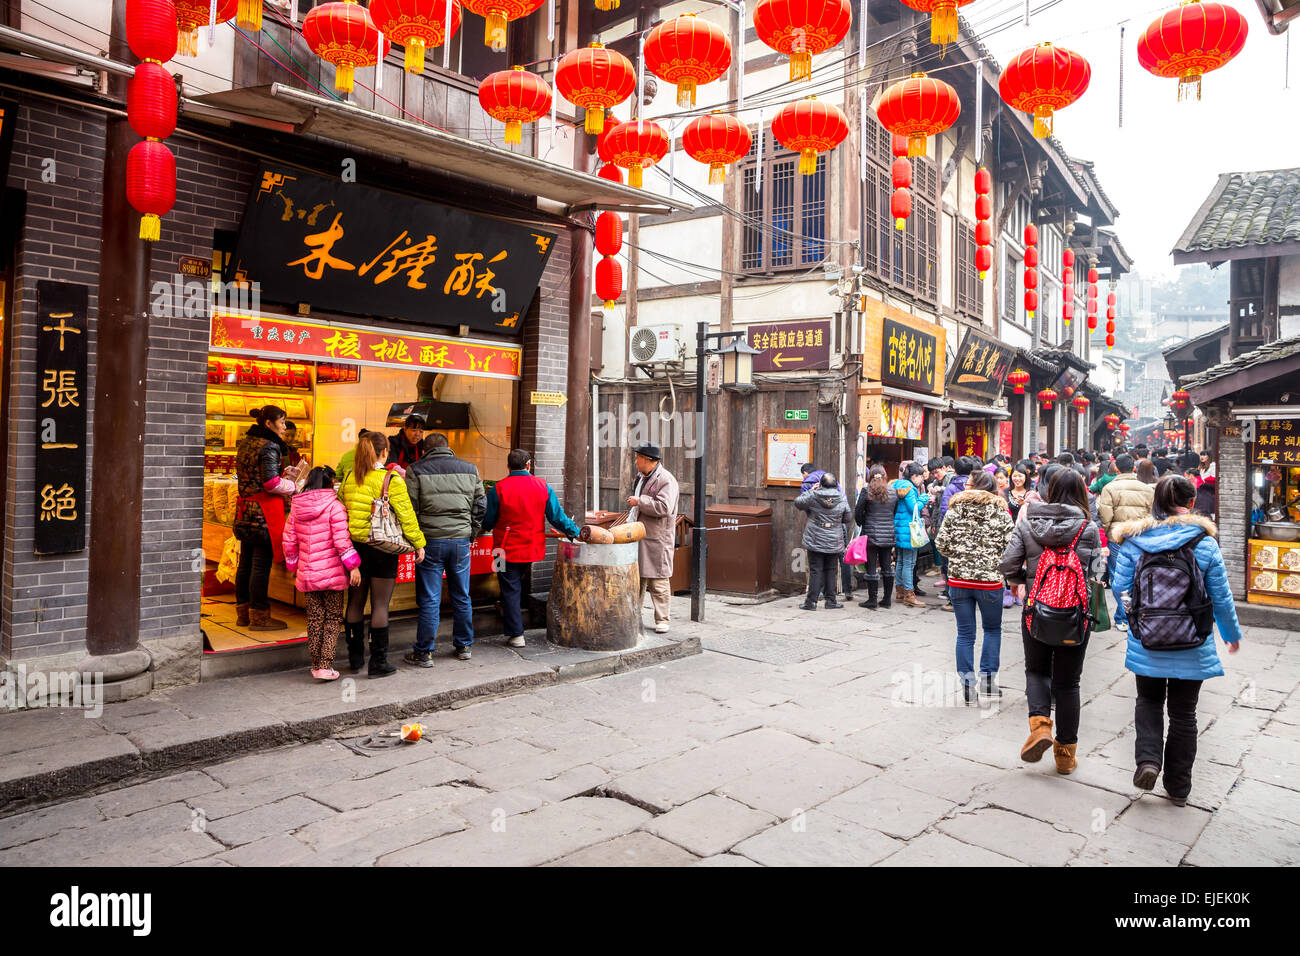 CHONGQING, CHINA - JAN 17: Unidentified Touristen sind bei Ausflügen die antike Stadt am 17. Januar 2014, Chongqing, China einkaufen. Stockfoto